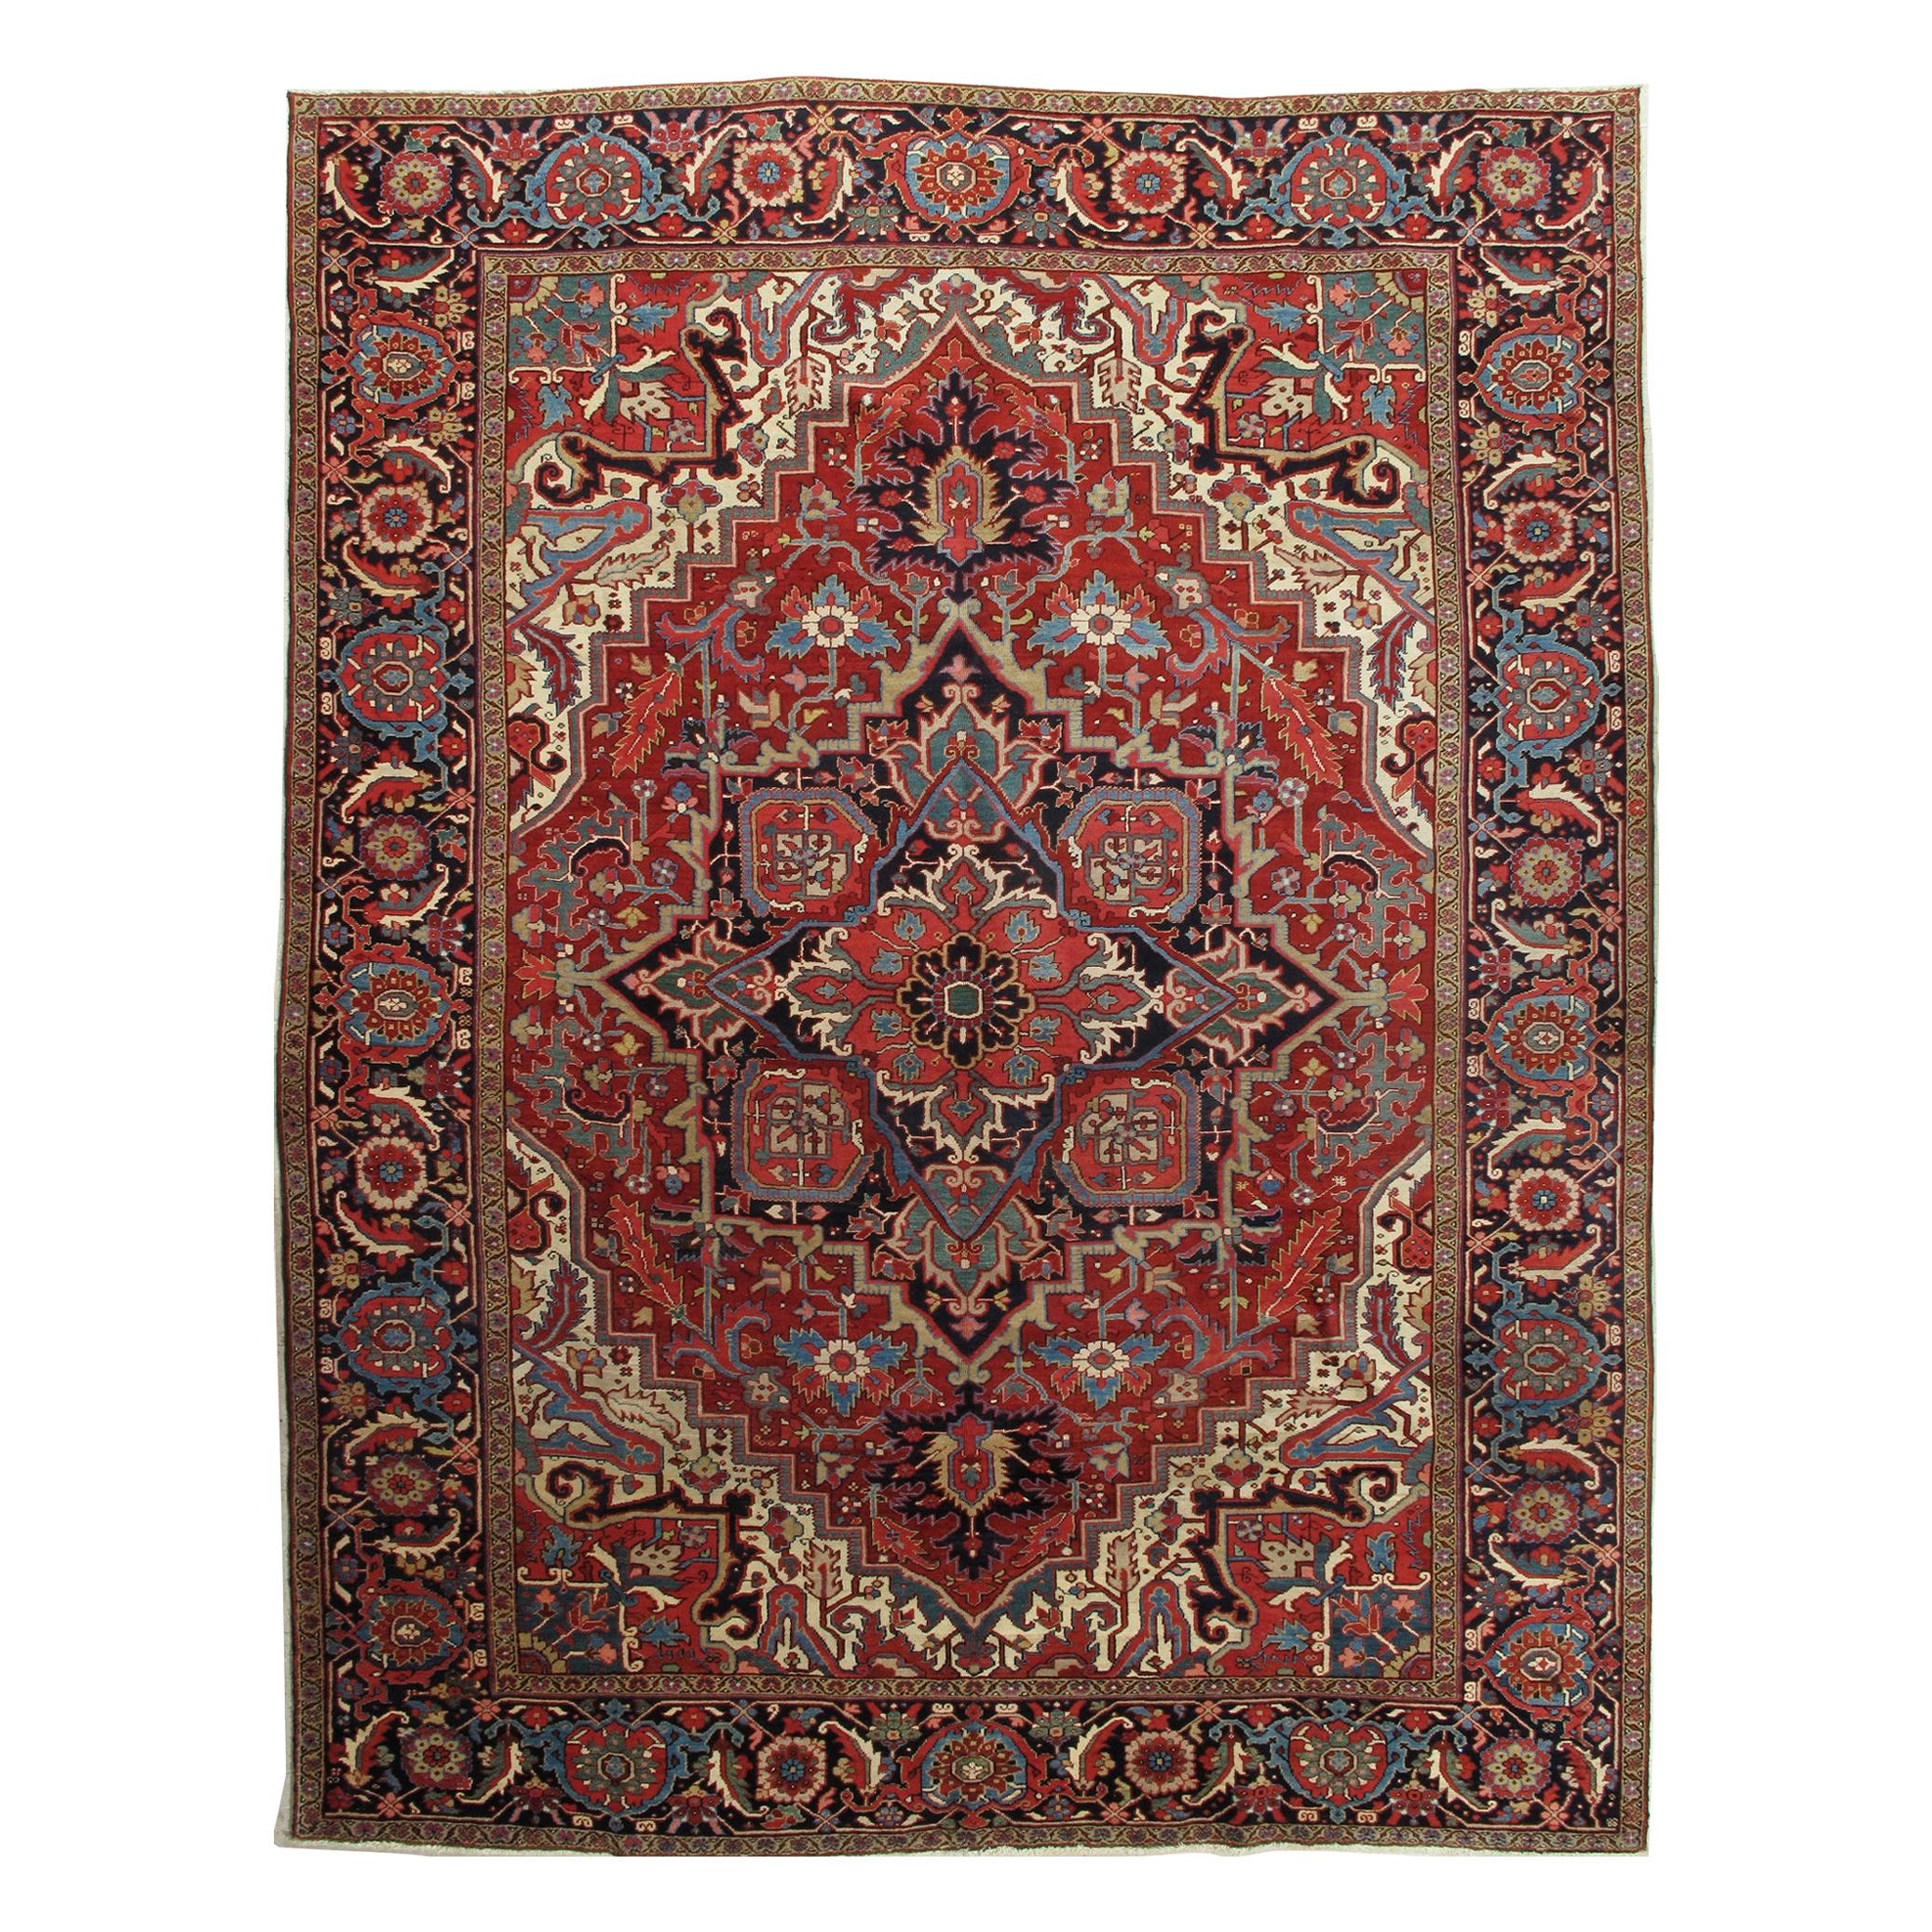 Antique Persian Heriz Carpet, Handmade Wool Oriental Rug, Rust, Navy, Lt Blue